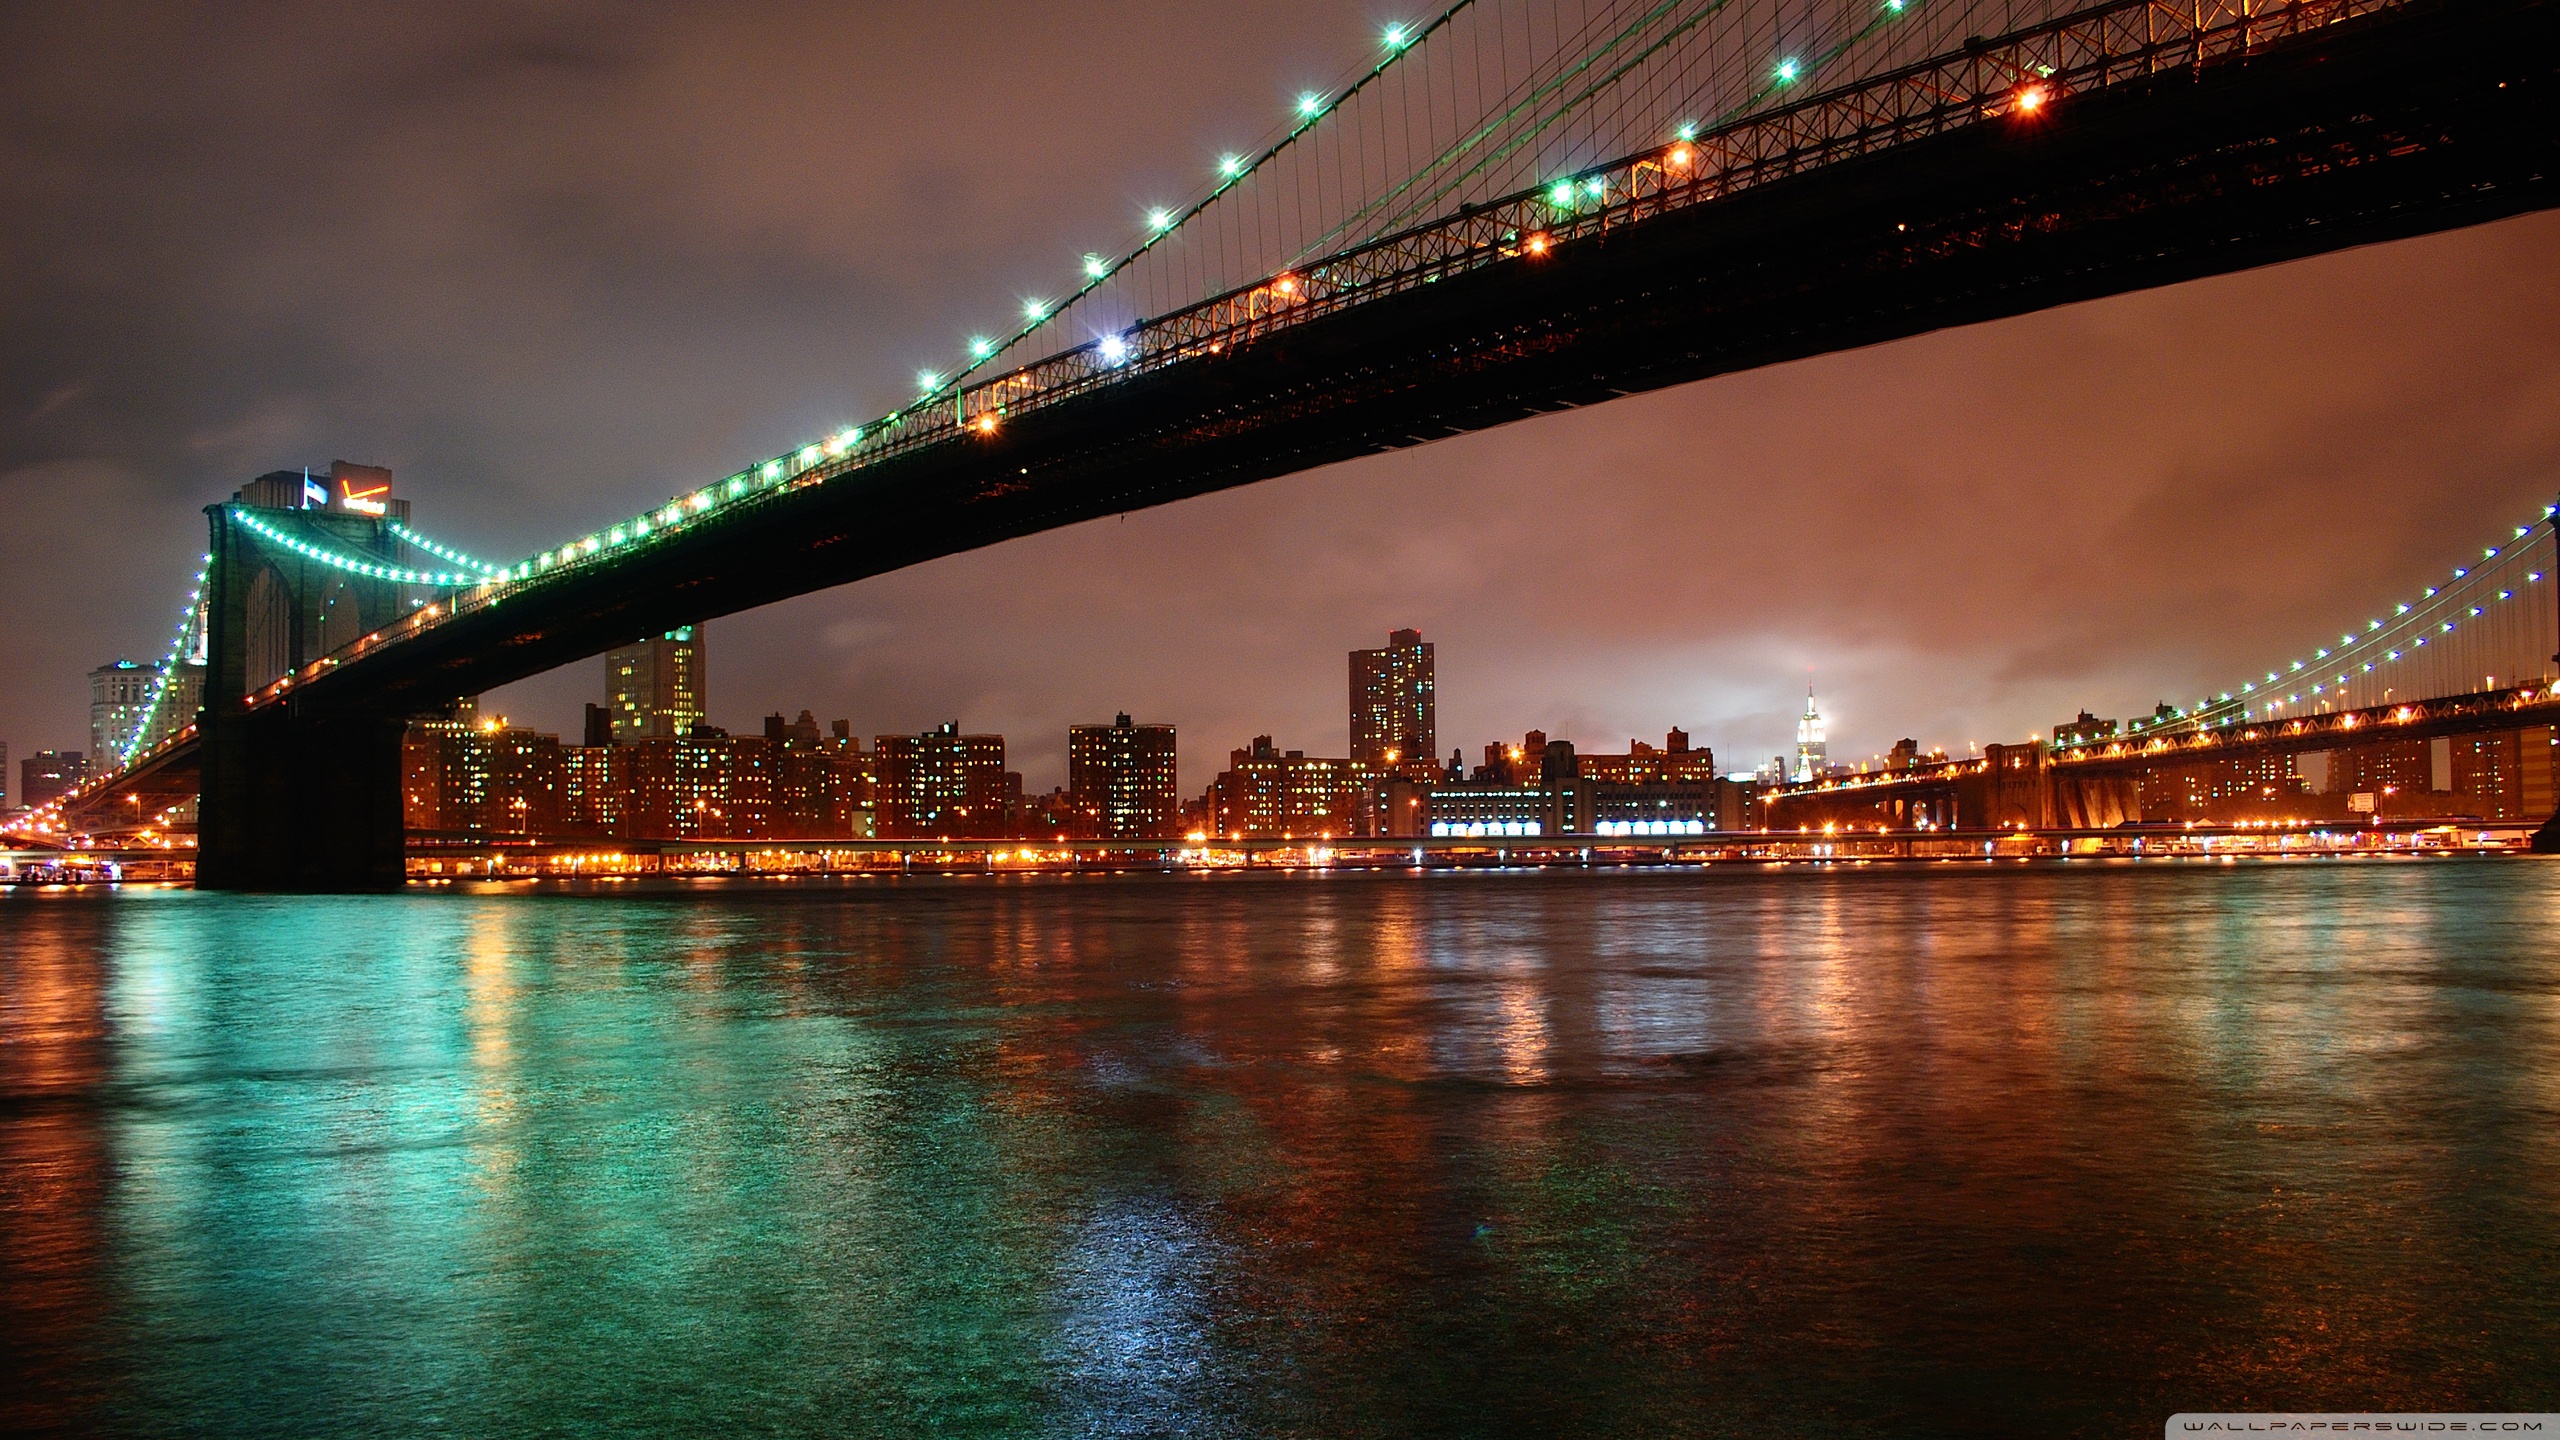 Brooklyn Bridge, New York at Night Ultra HD Desktop Background Wallpaper for 4K UHD TV, Multi Display, Dual Monitor, Tablet